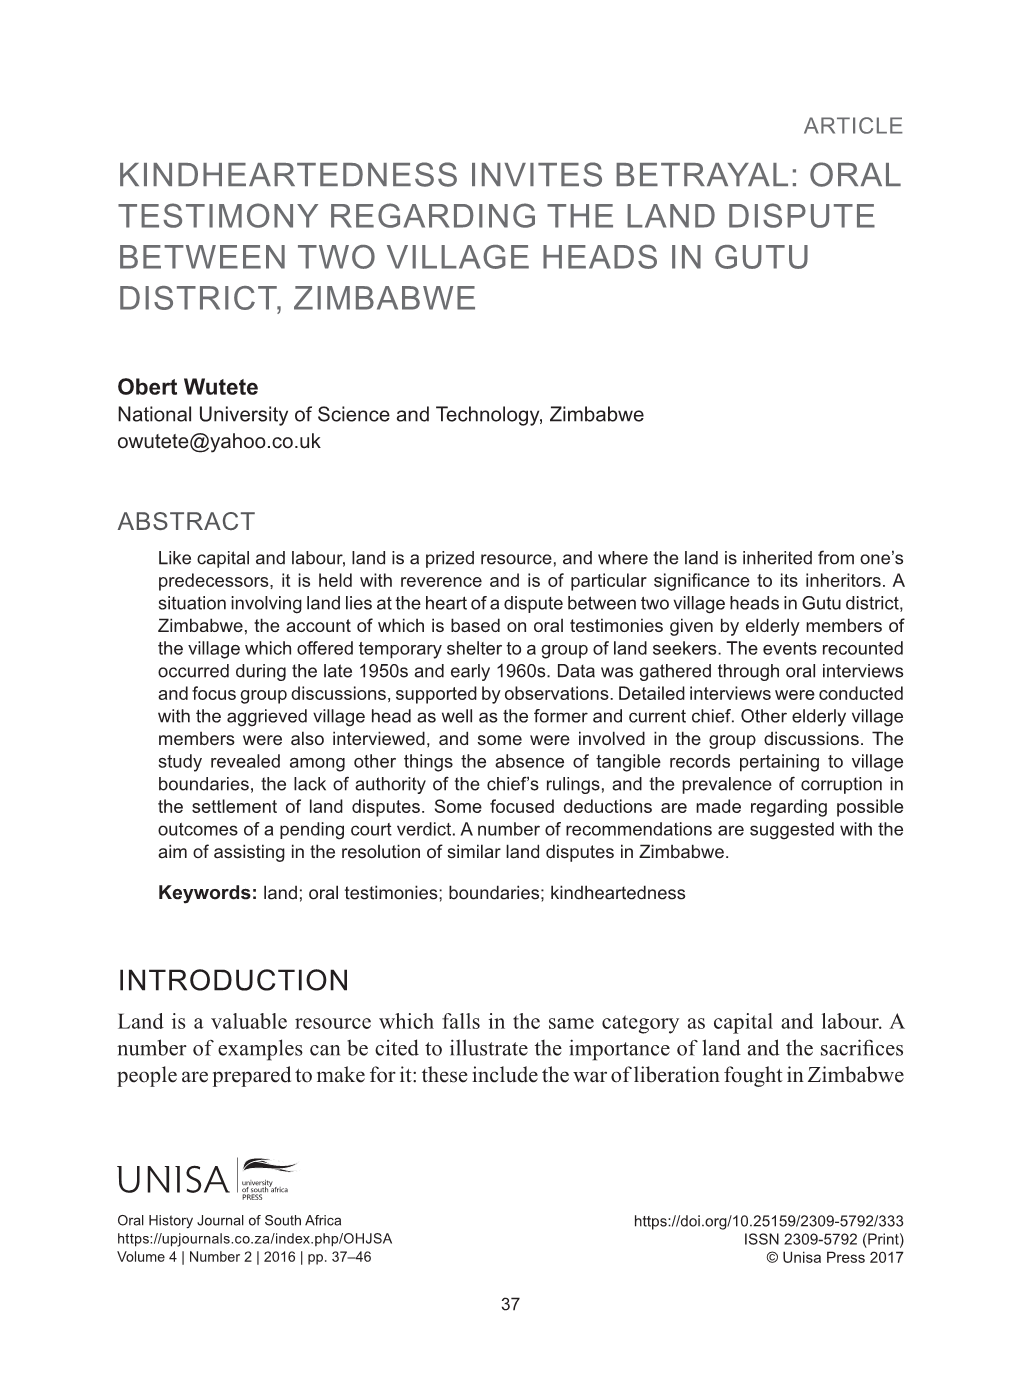 Oral Testimony Regarding the Land Dispute Between Two Village Heads in Gutu District, Zimbabwe